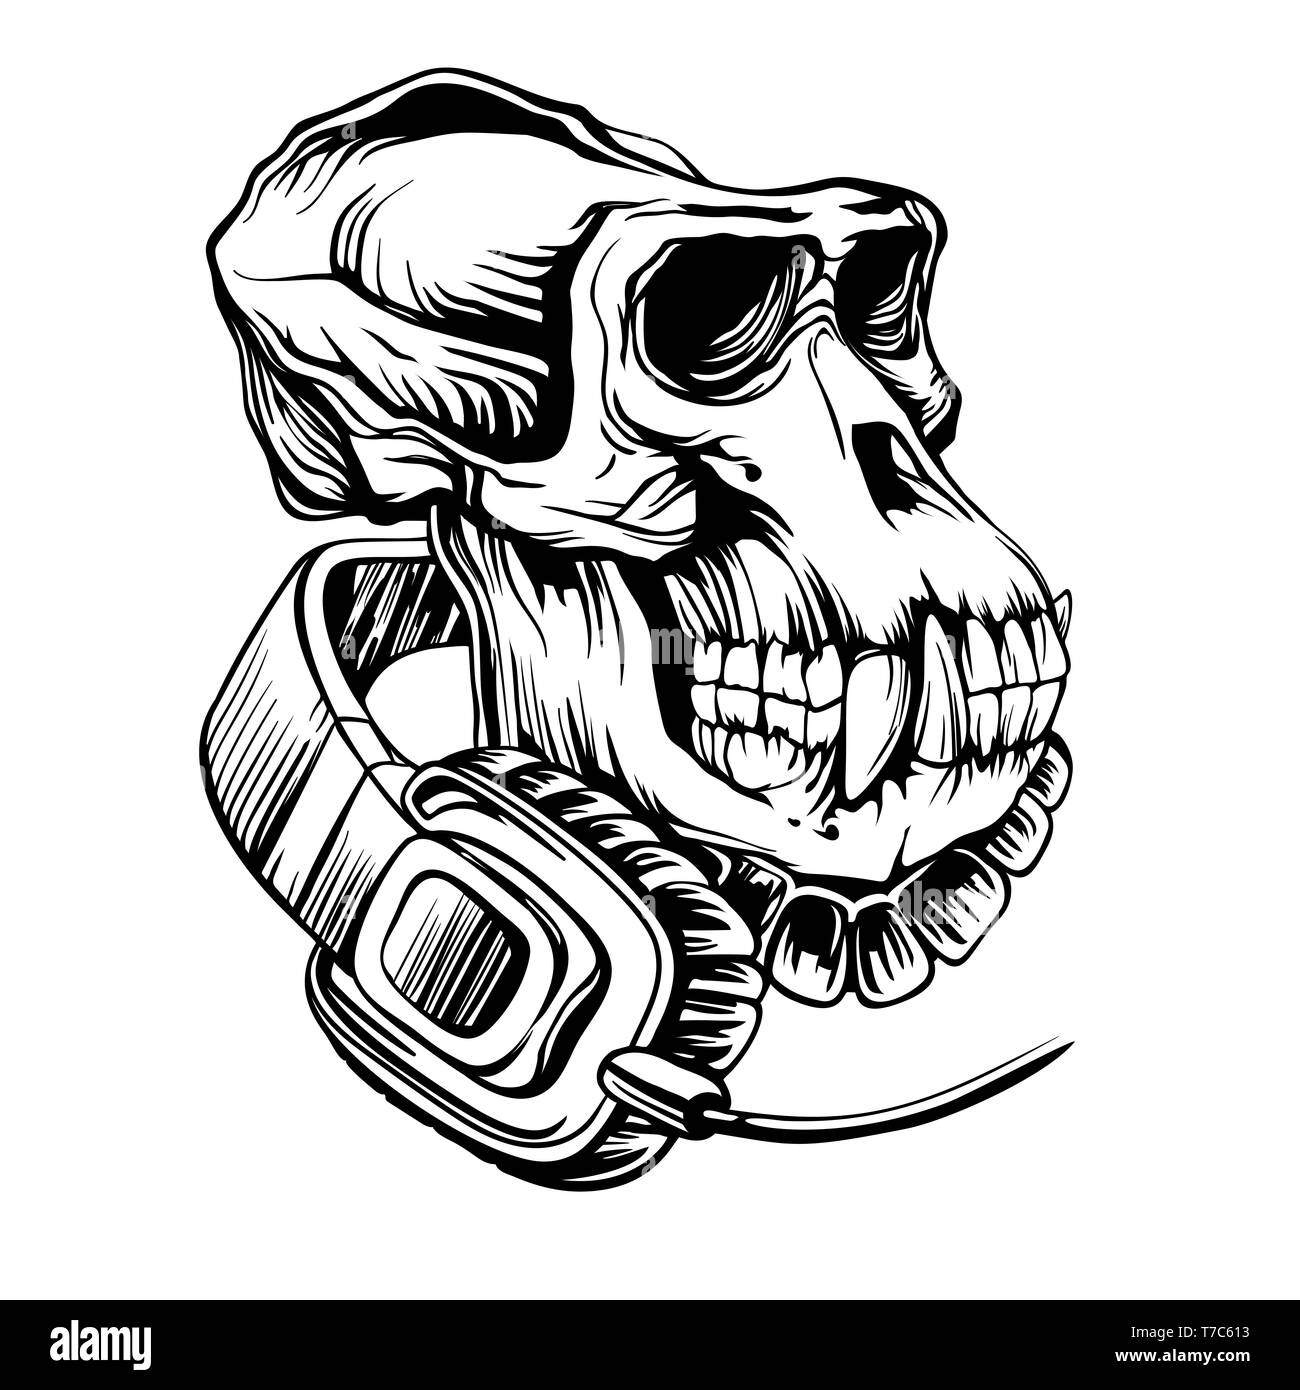 Skull of a gorilla with headphones Stock Photo